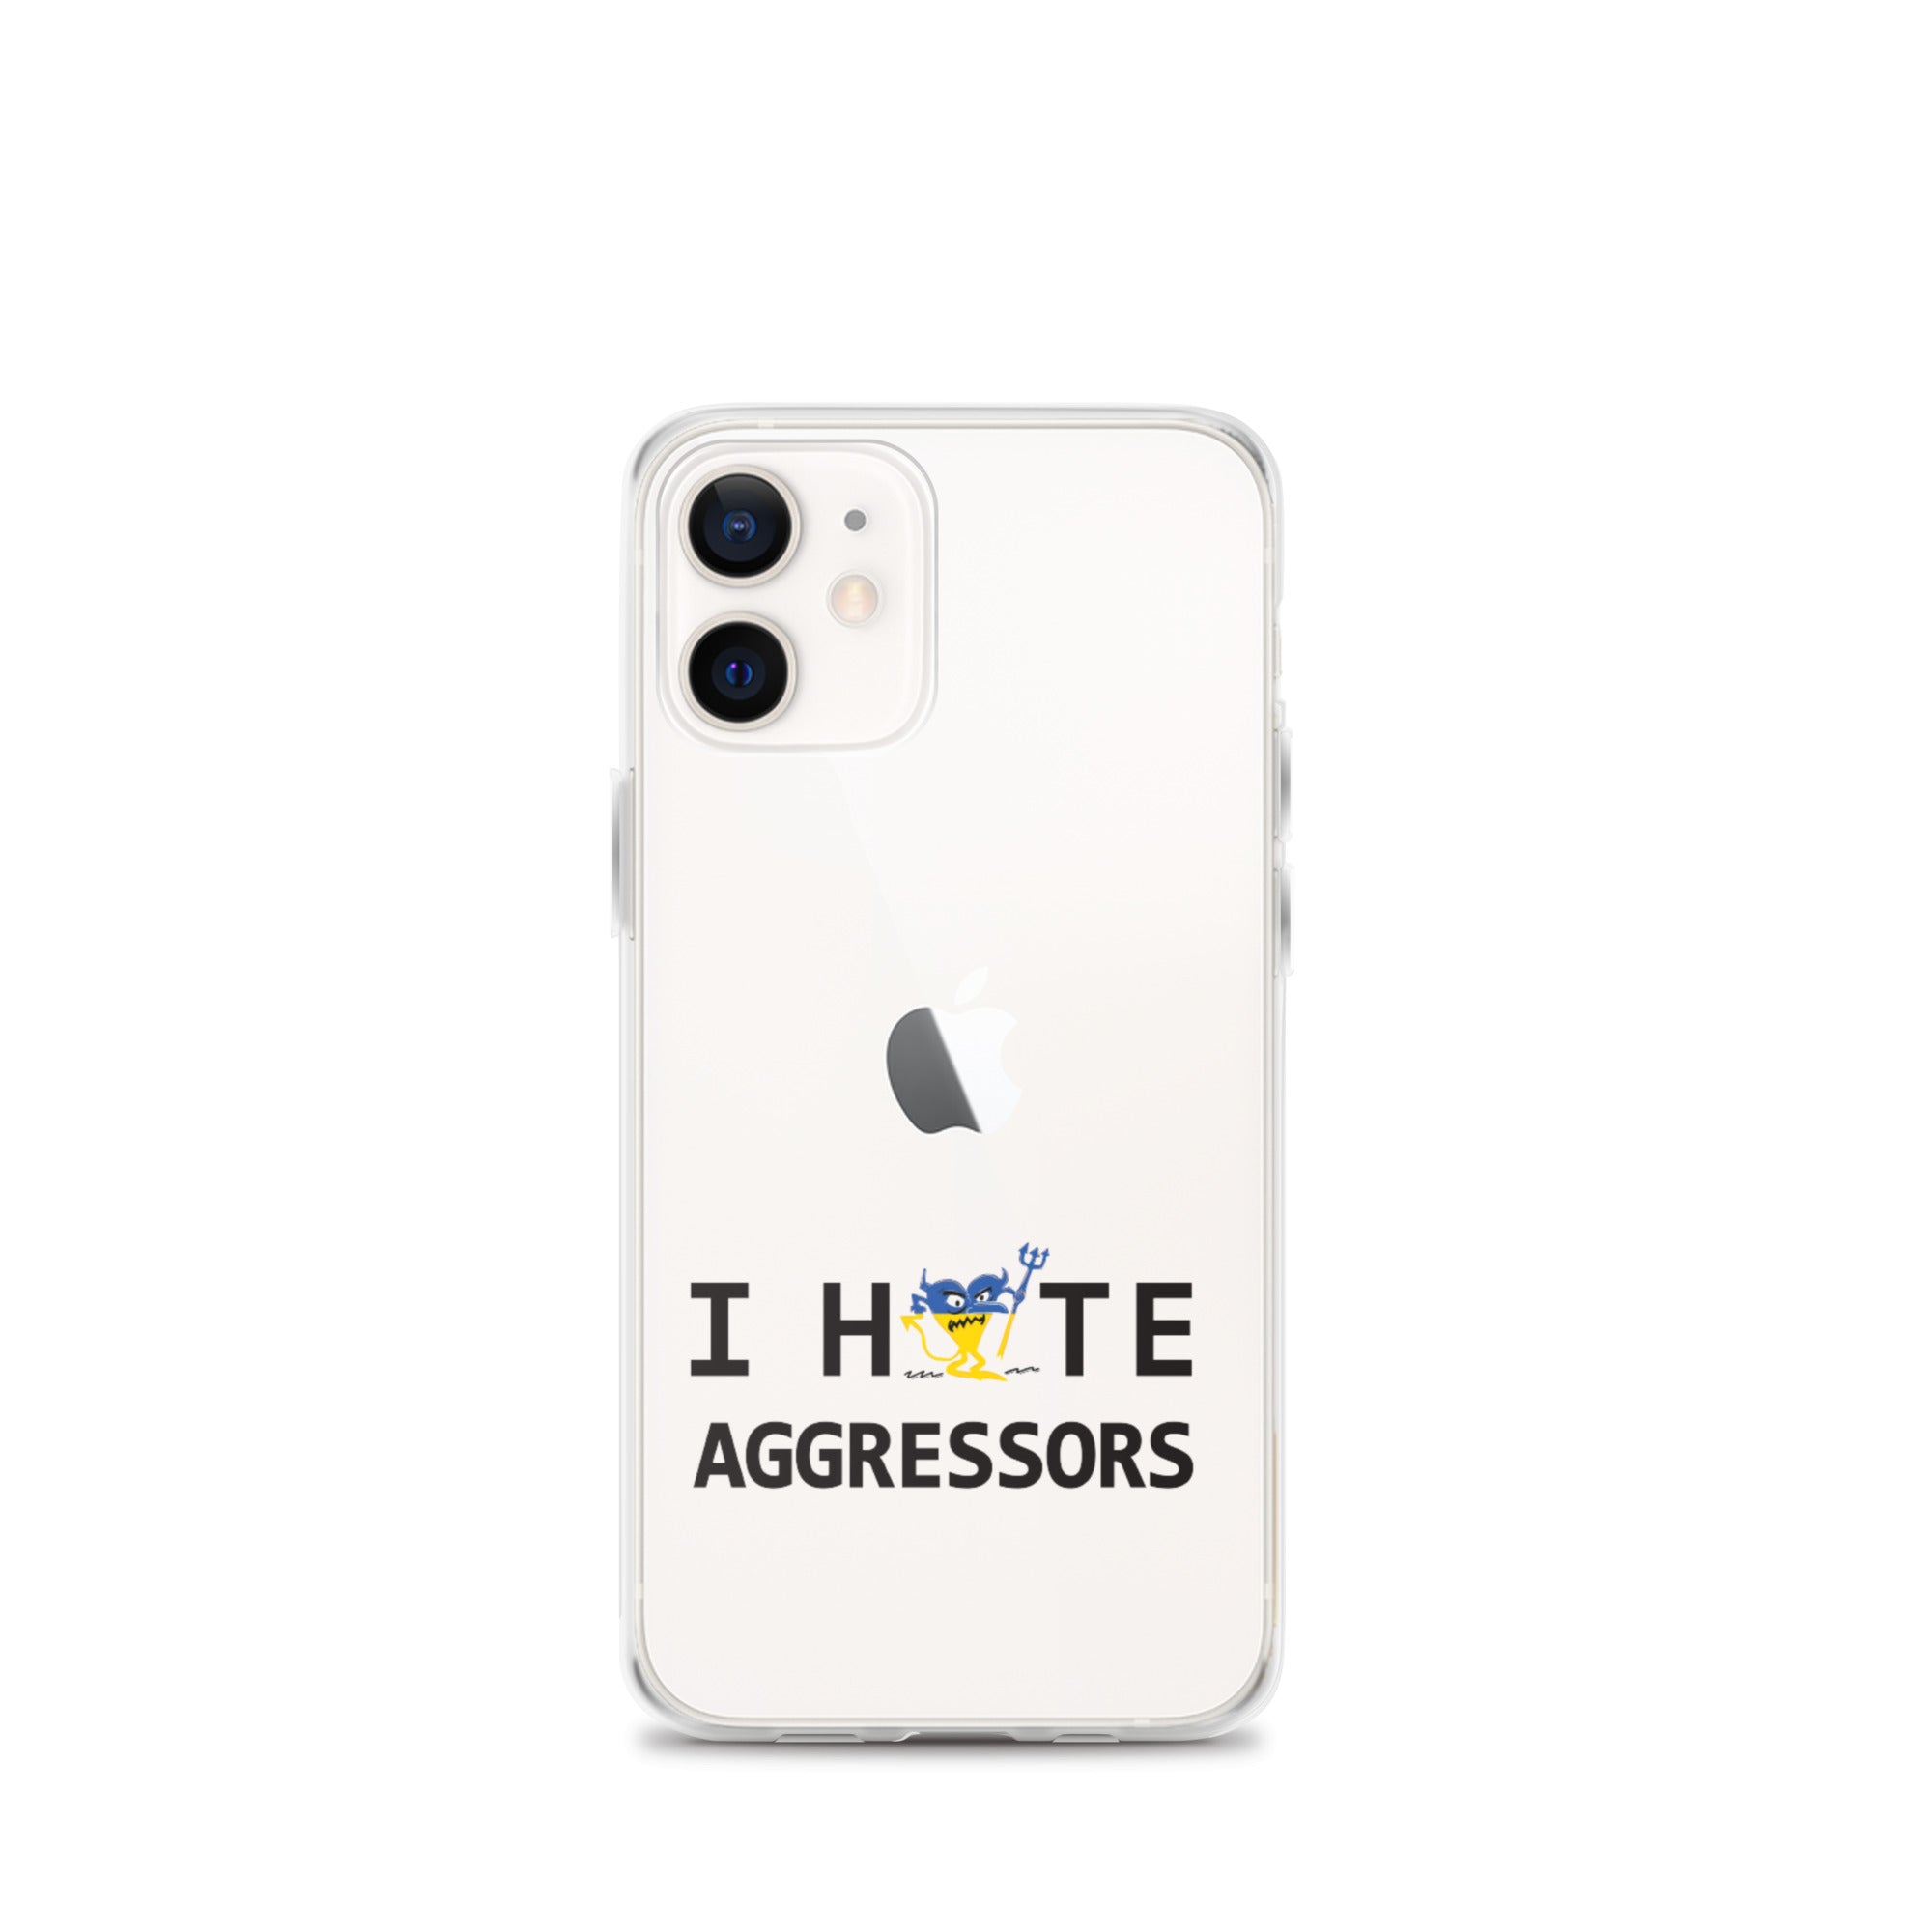 I HATE AGGRESSORS iPhone Case